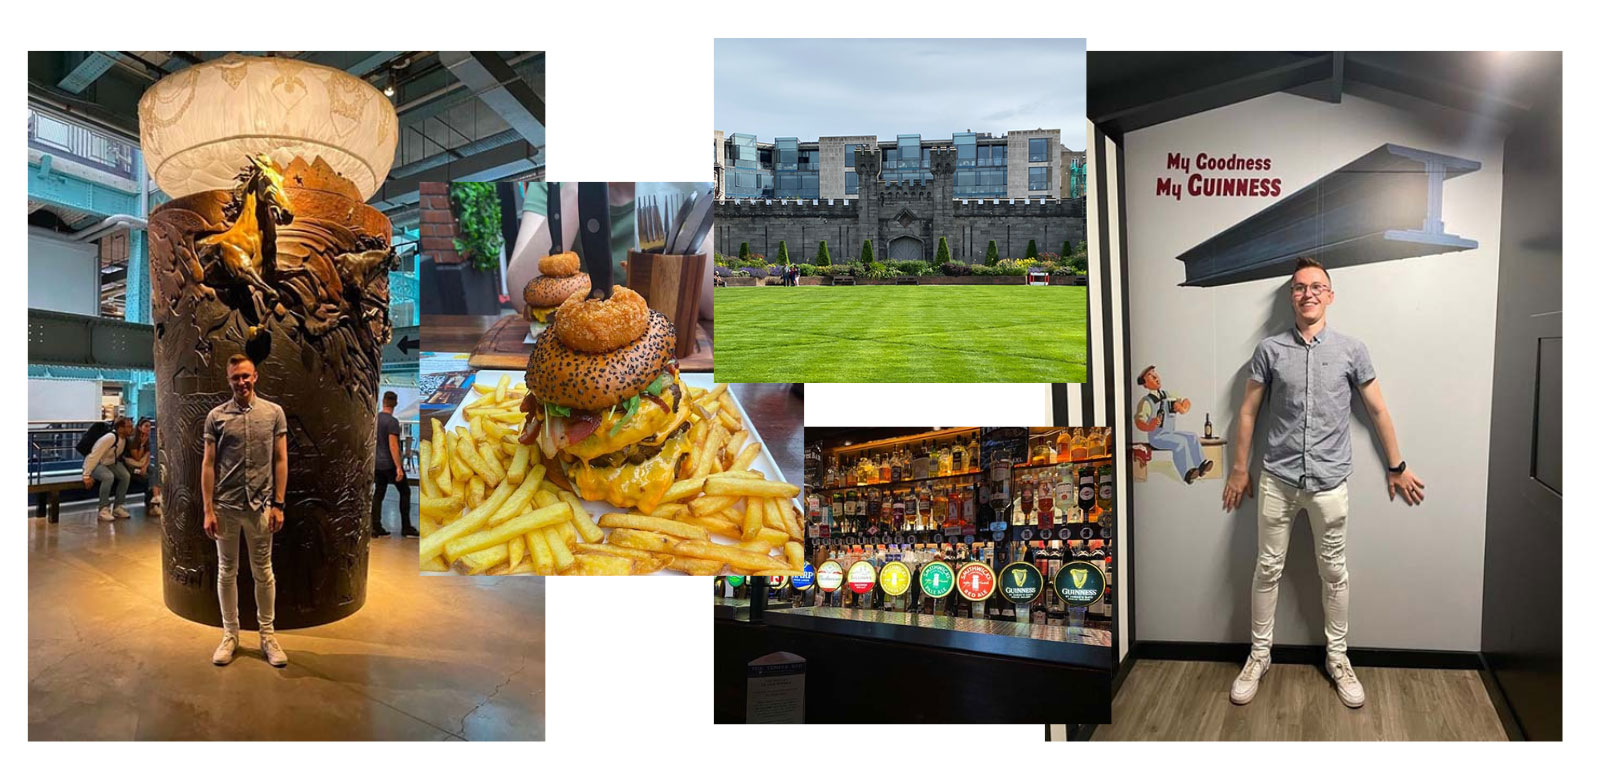 Patrick in Dublin, Dublin Castle, large burger and a bar